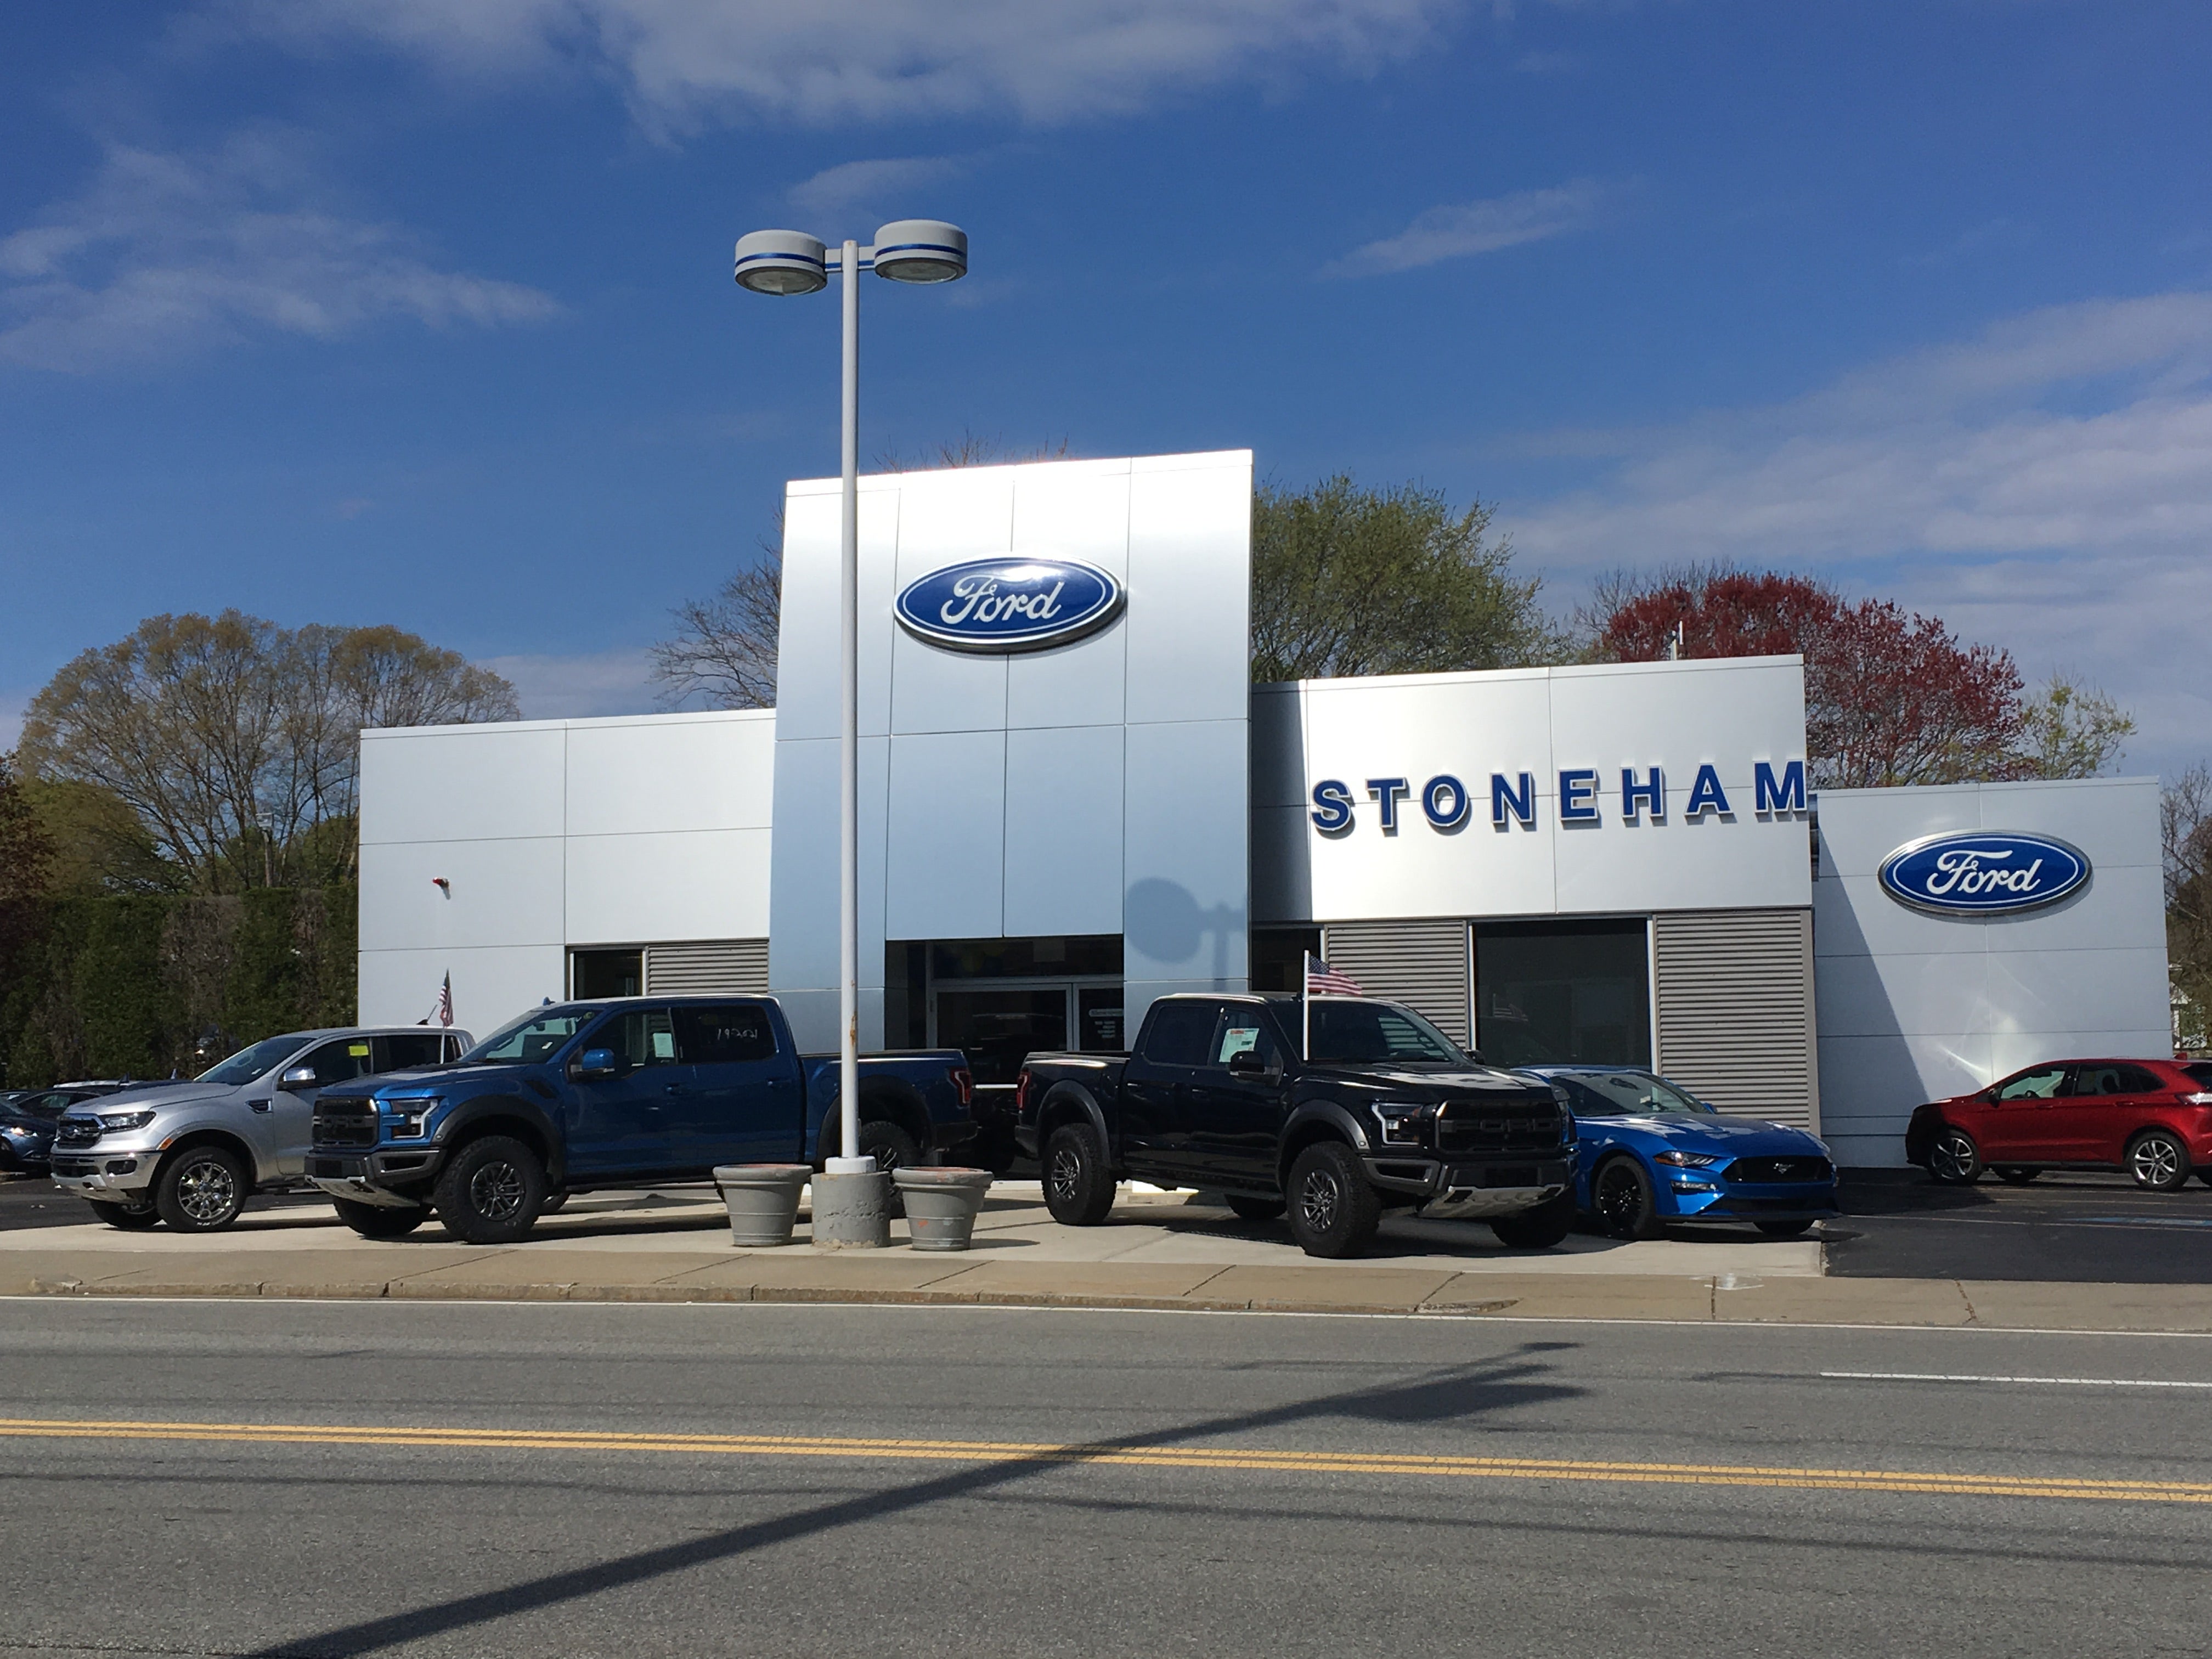 Stoneham Ford in Stoneham, MA